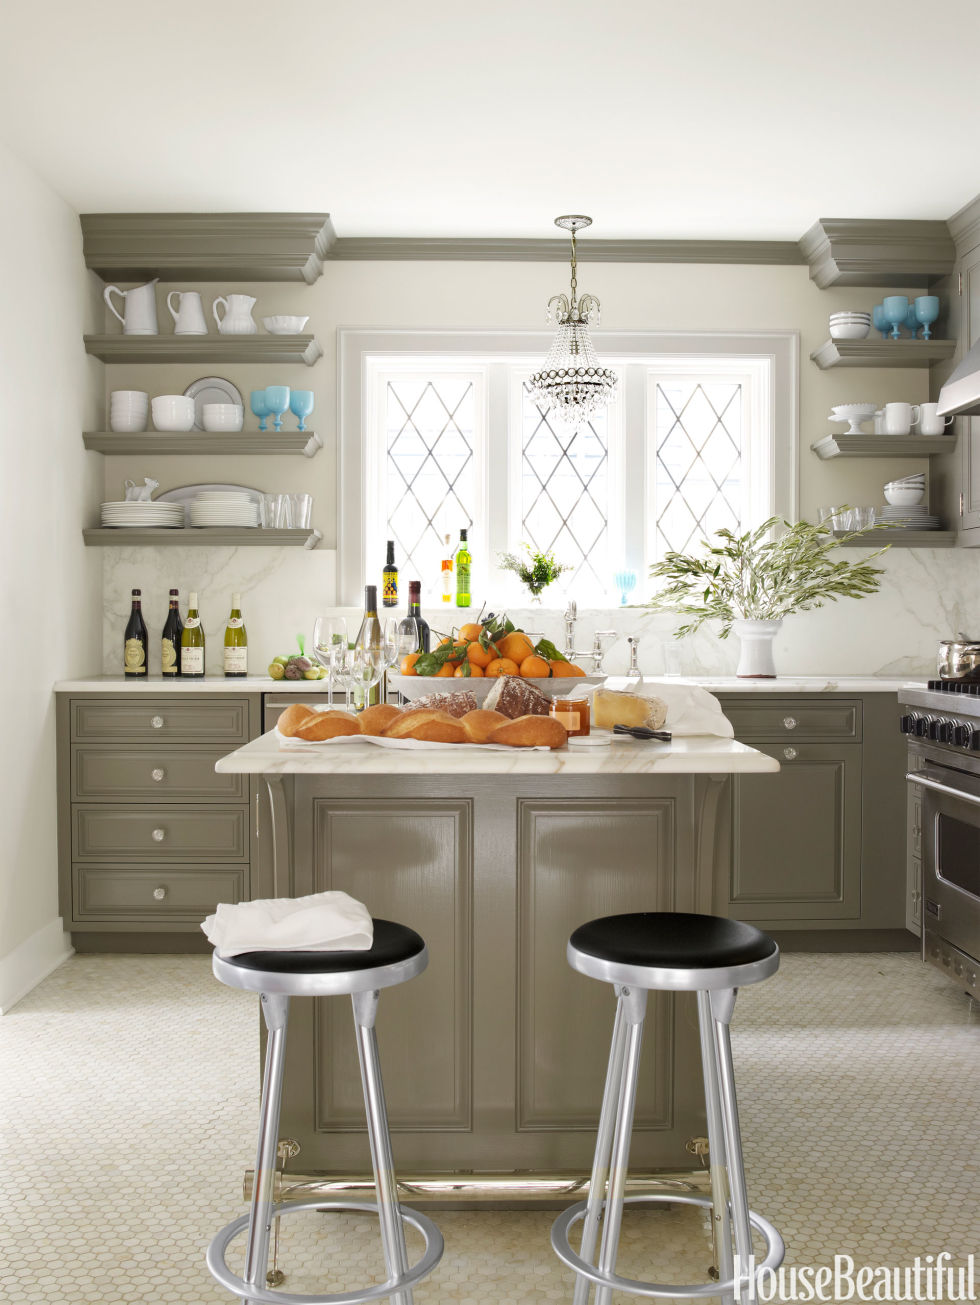 Stylish 20+ Best Kitchen Paint Colors - Ideas for Popular Kitchen Colors paint color ideas for kitchen walls